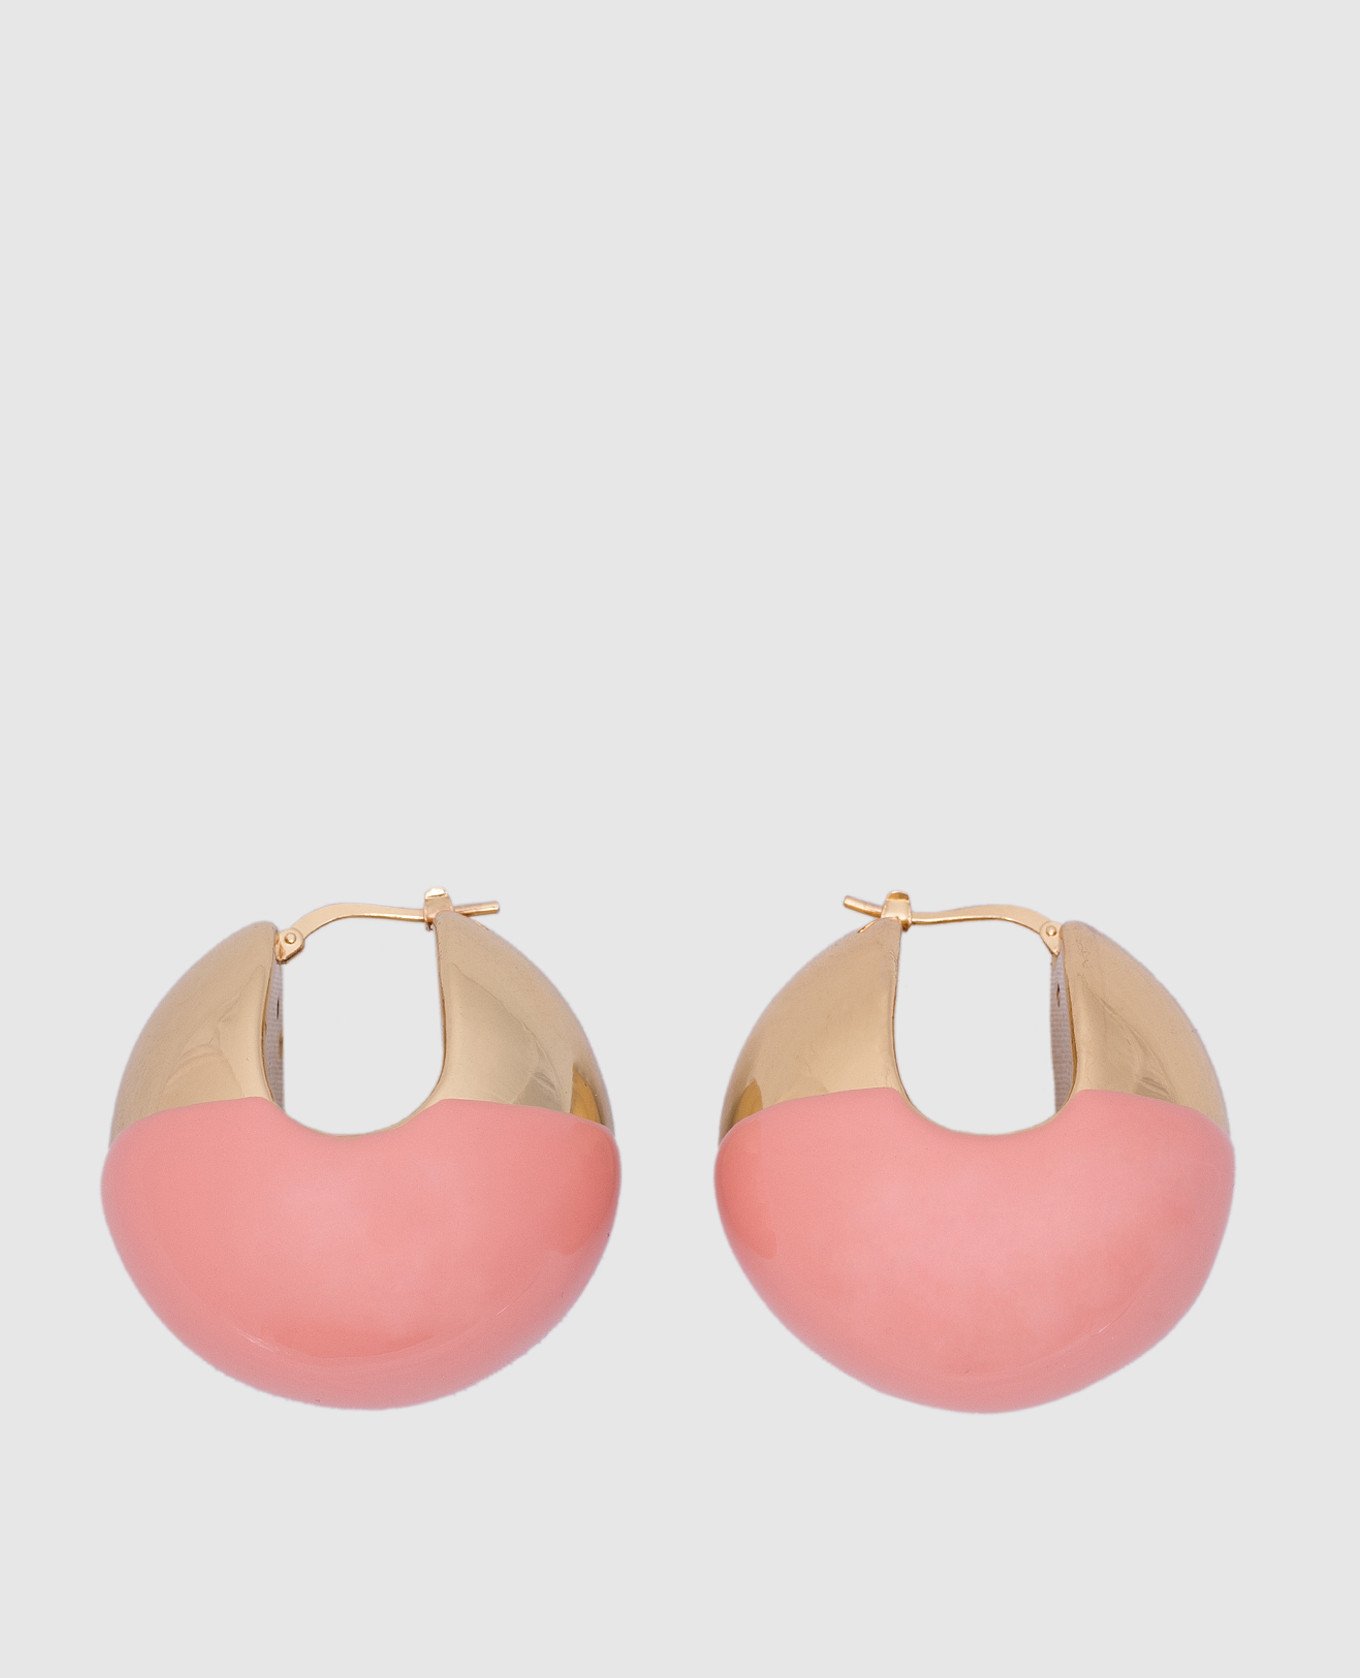 24k gold plated pink boule earrings with enamel